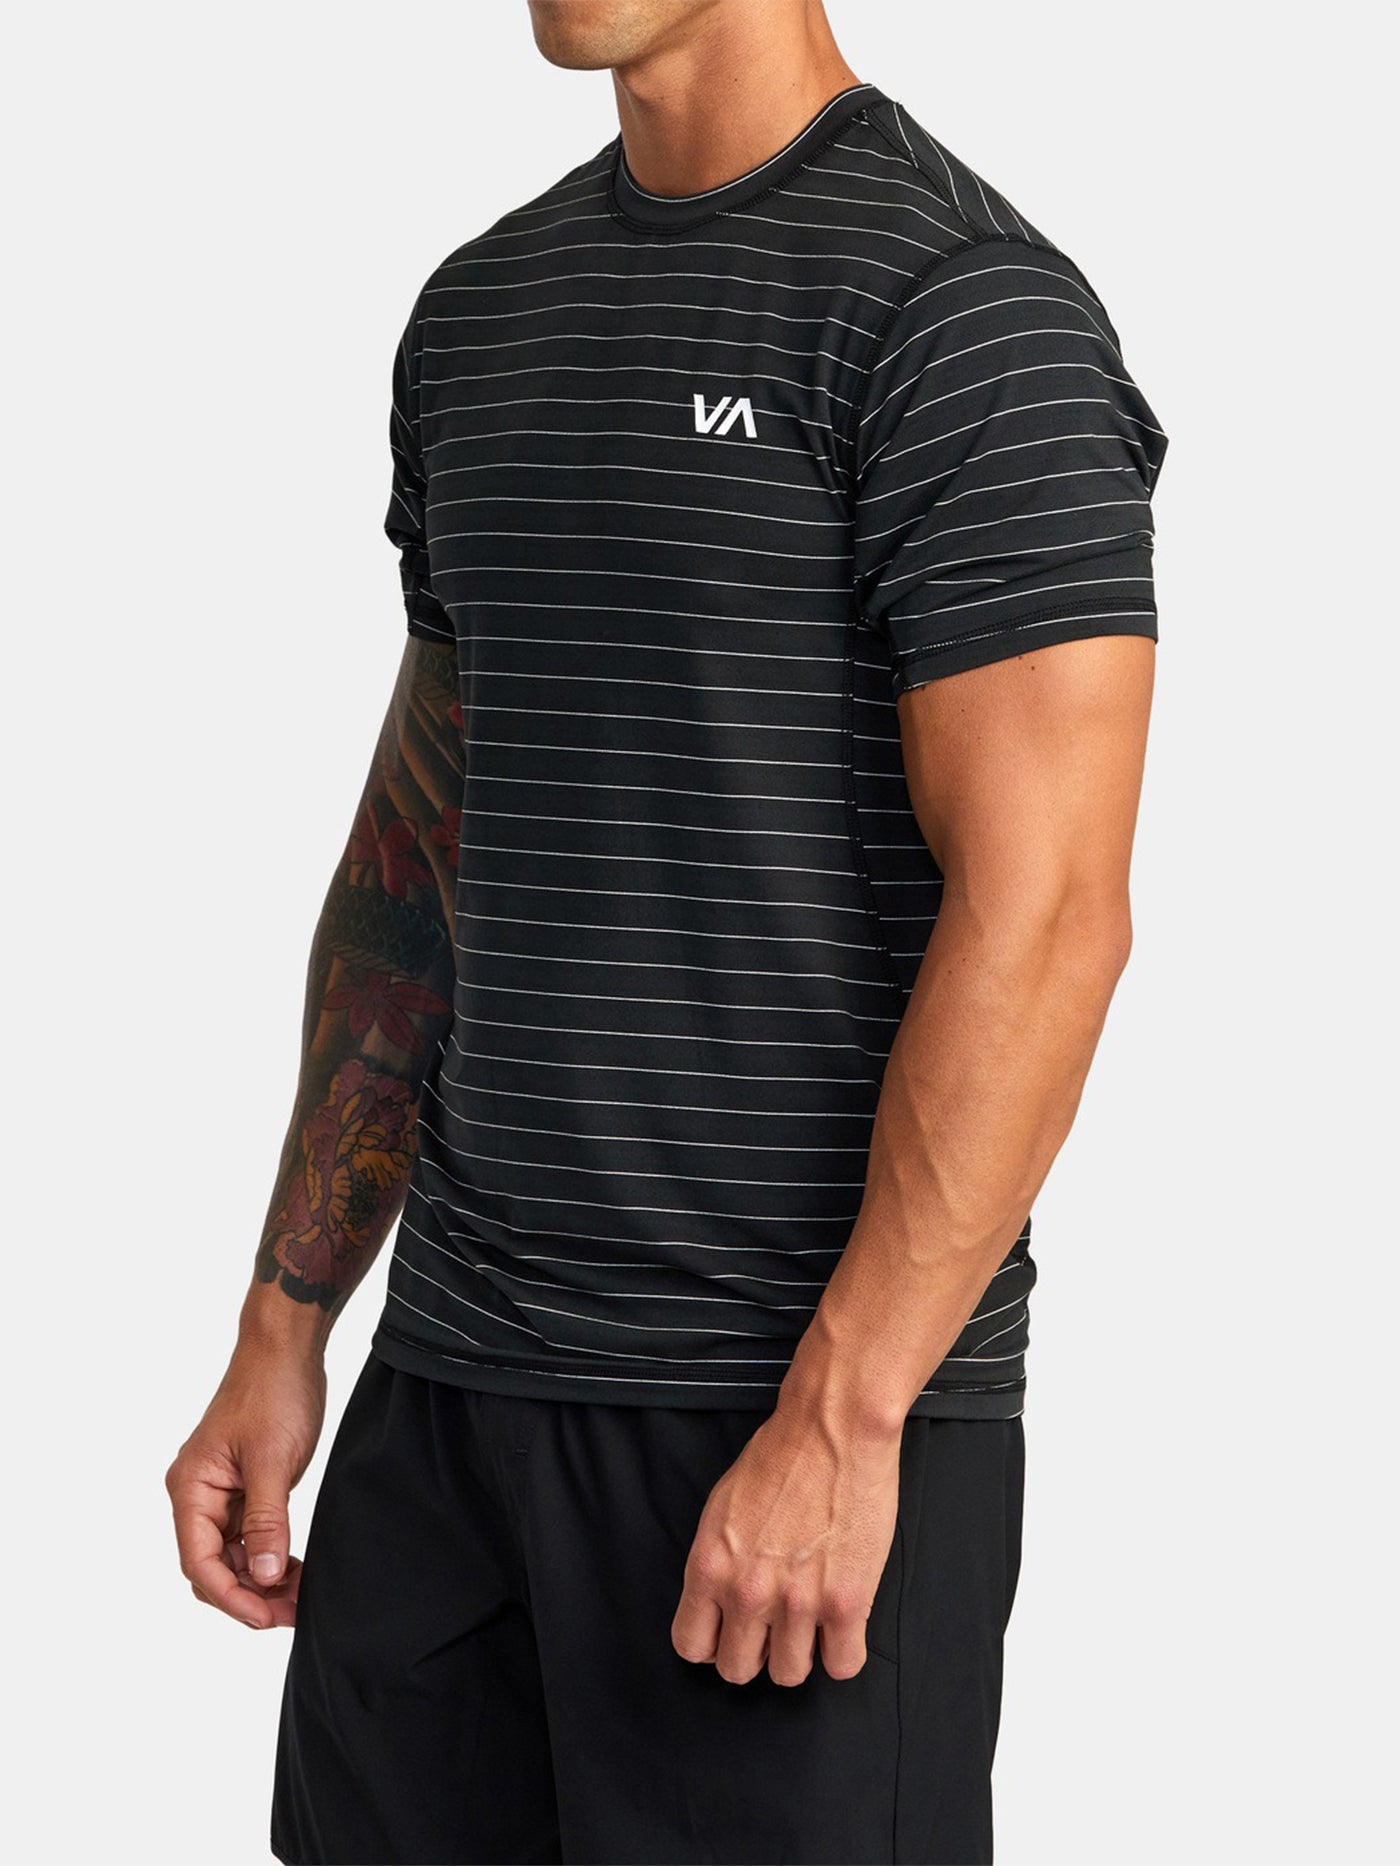 RVCA VA Vent Stripe T-Shirt